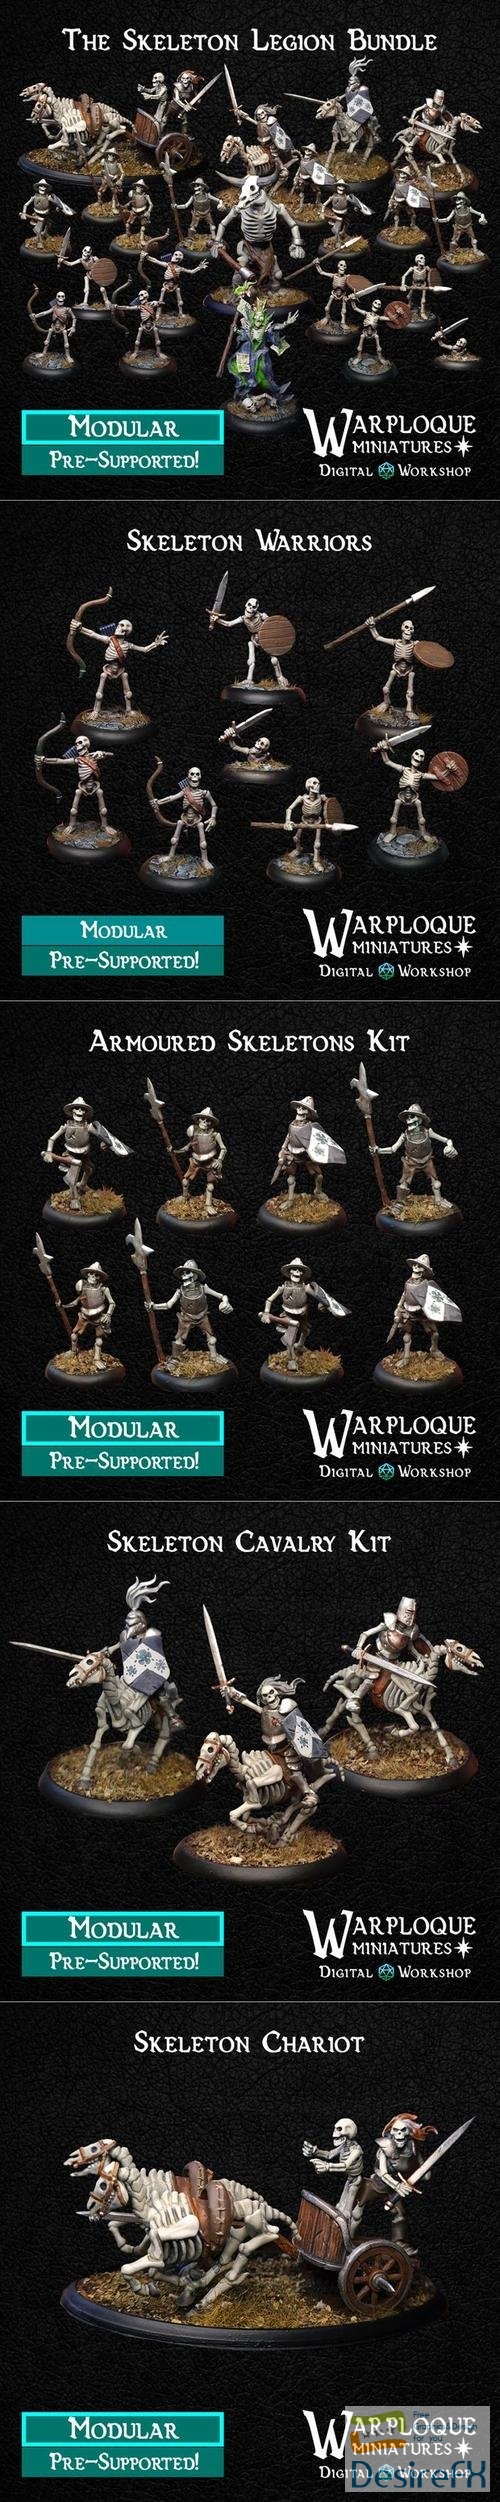 Warploque Miniatures - The Skeleton Legion – 3D Print